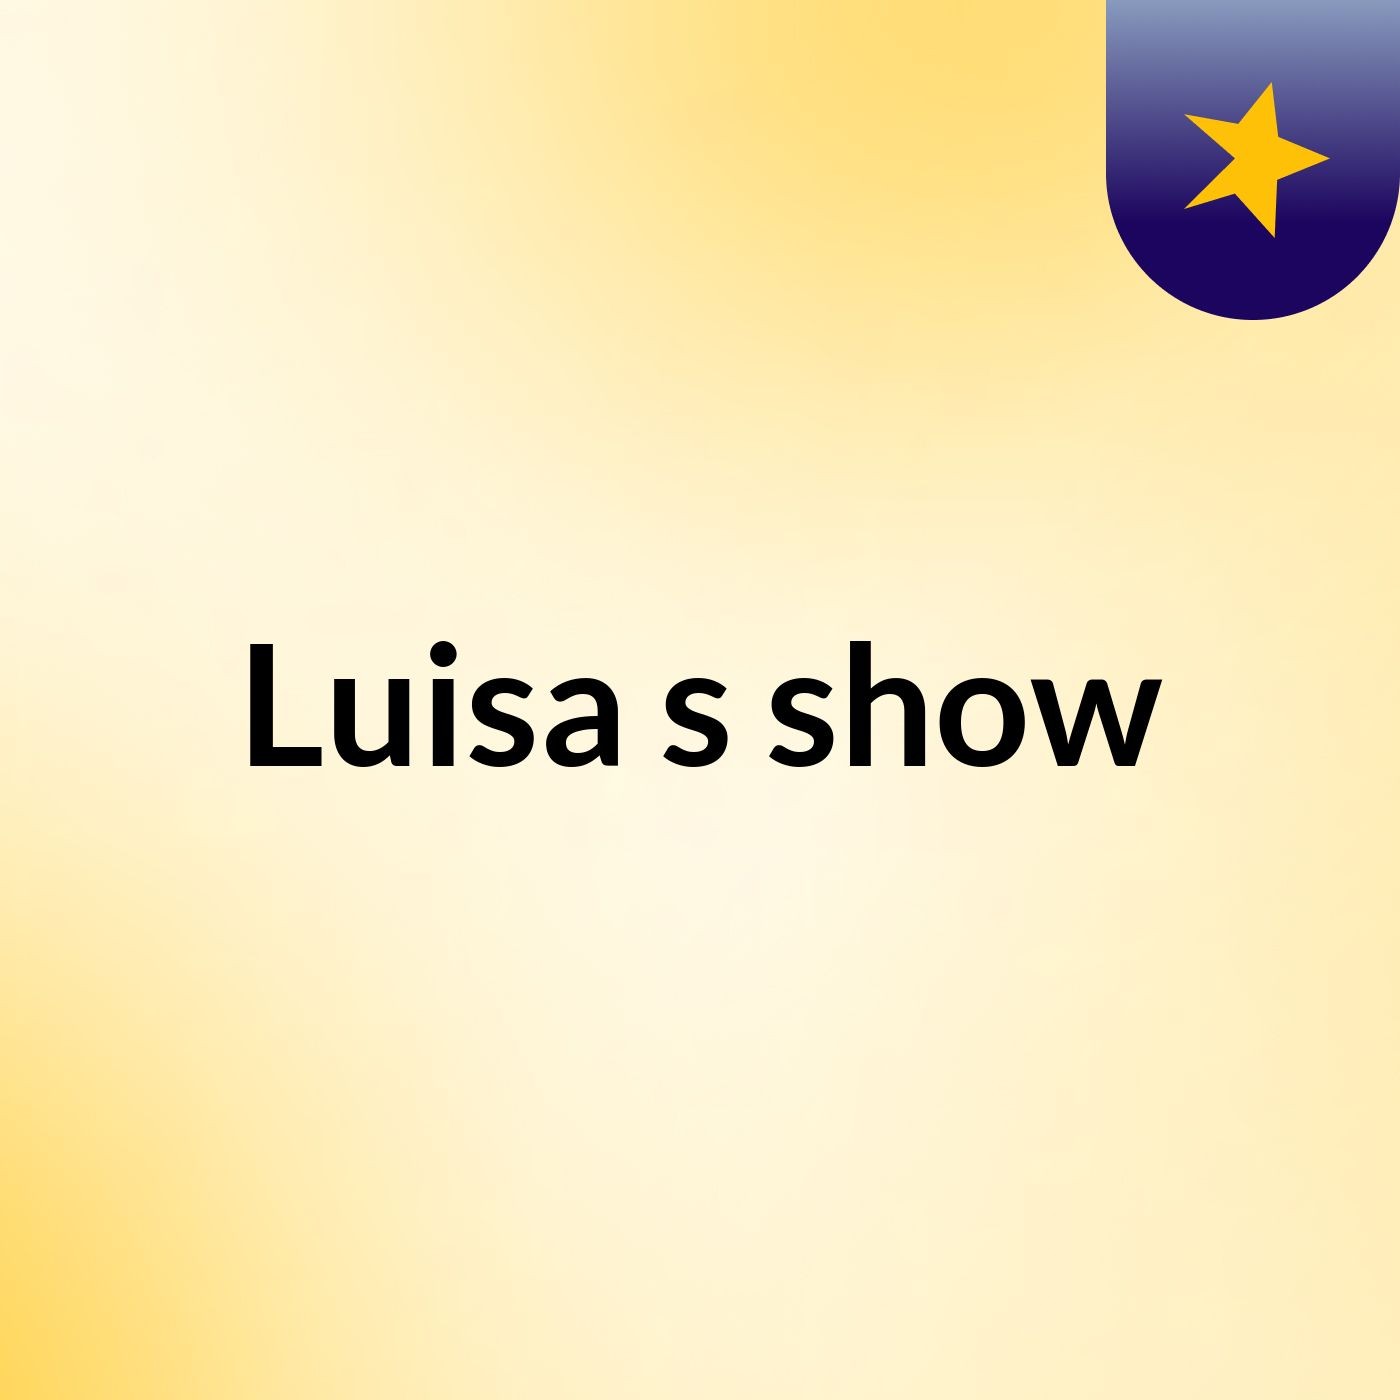 Luisa's show